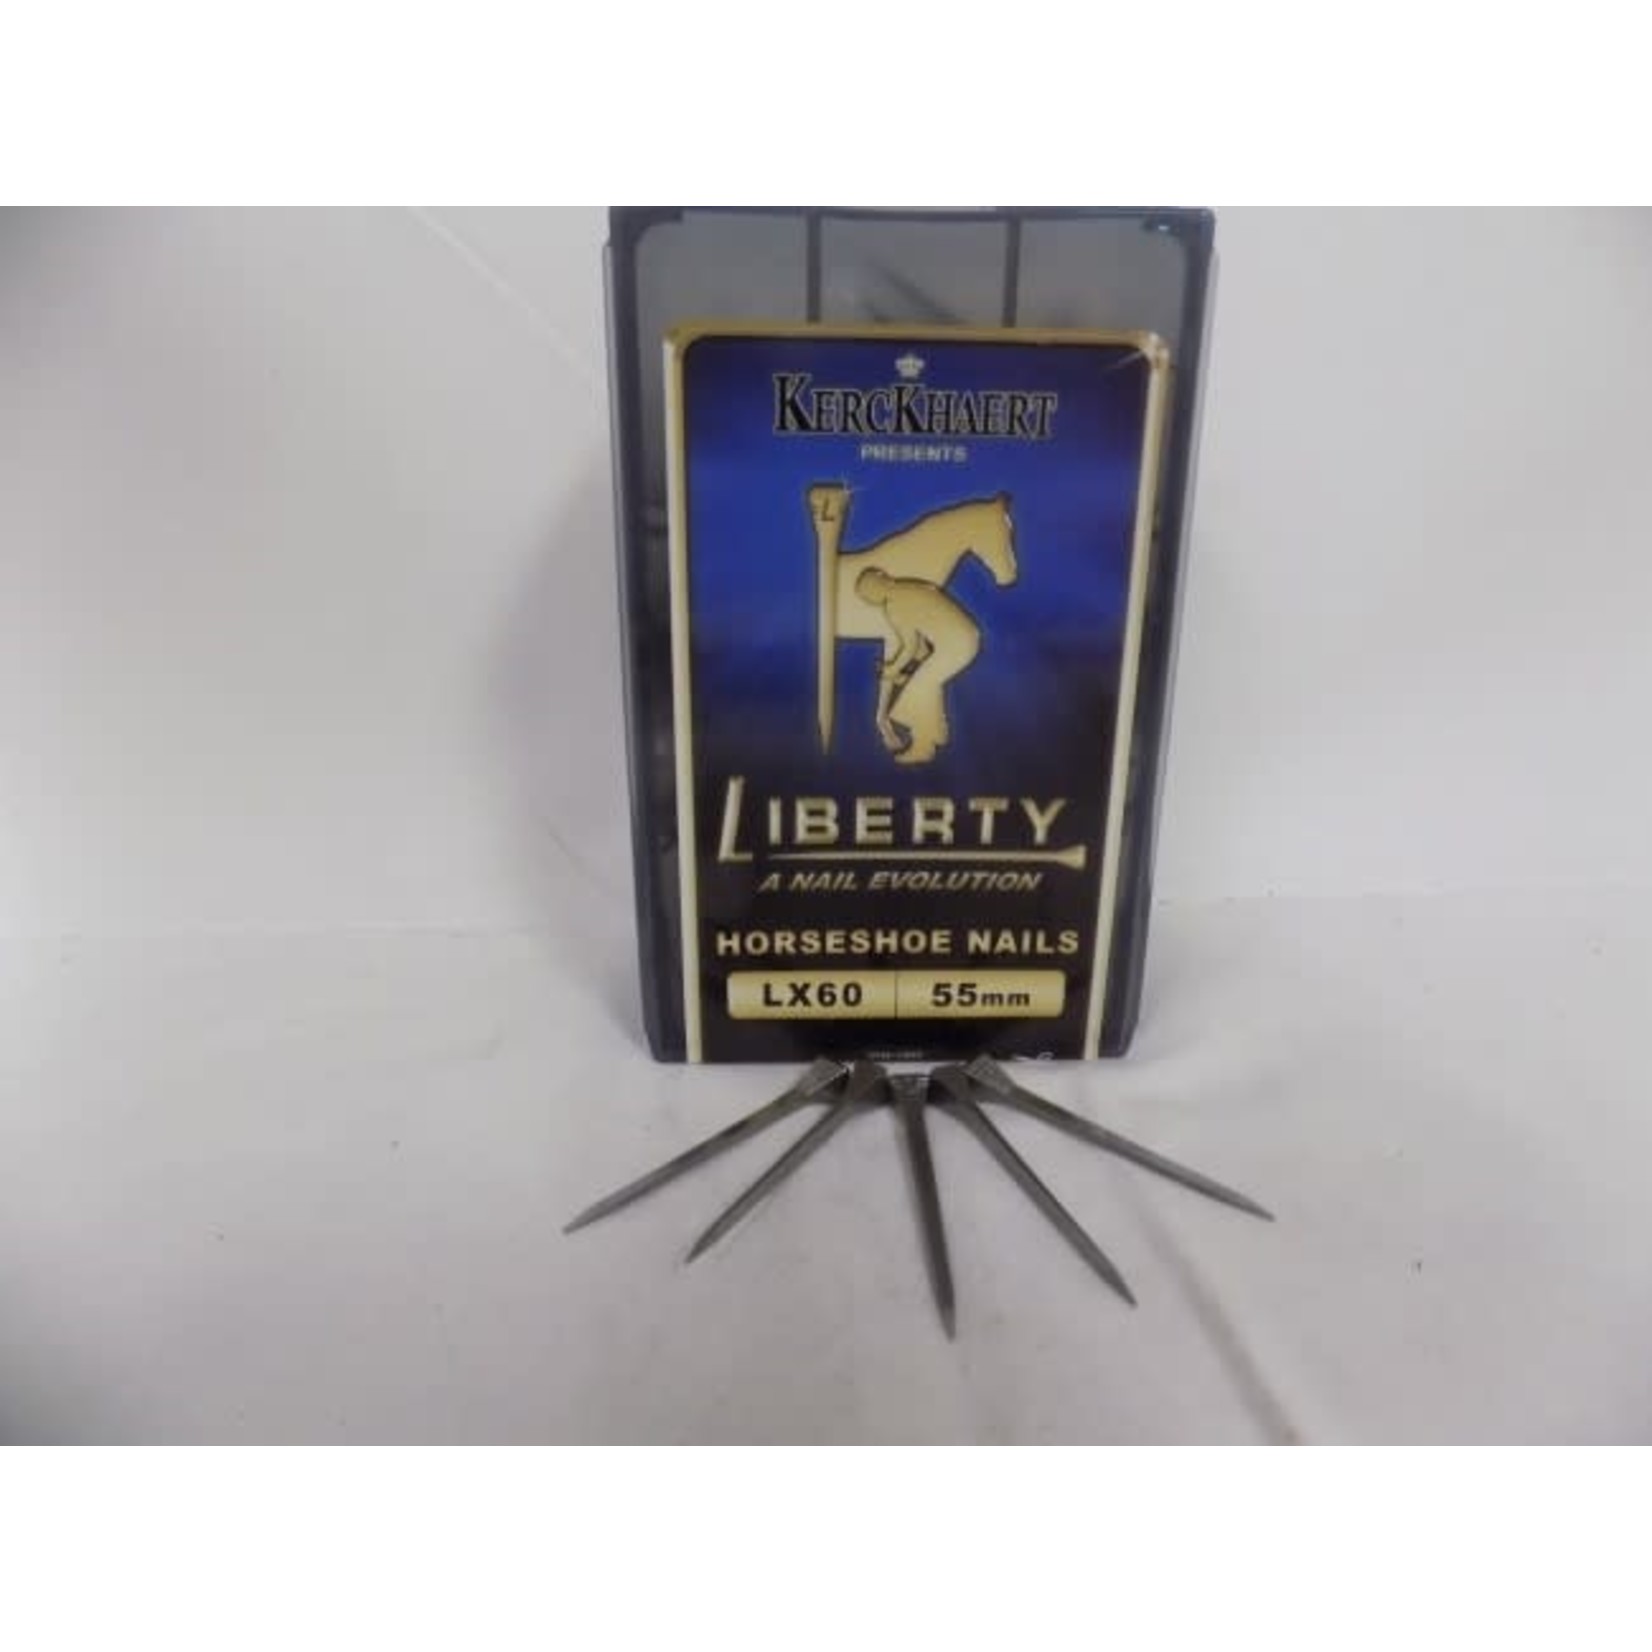 Liberty Liberty LX60